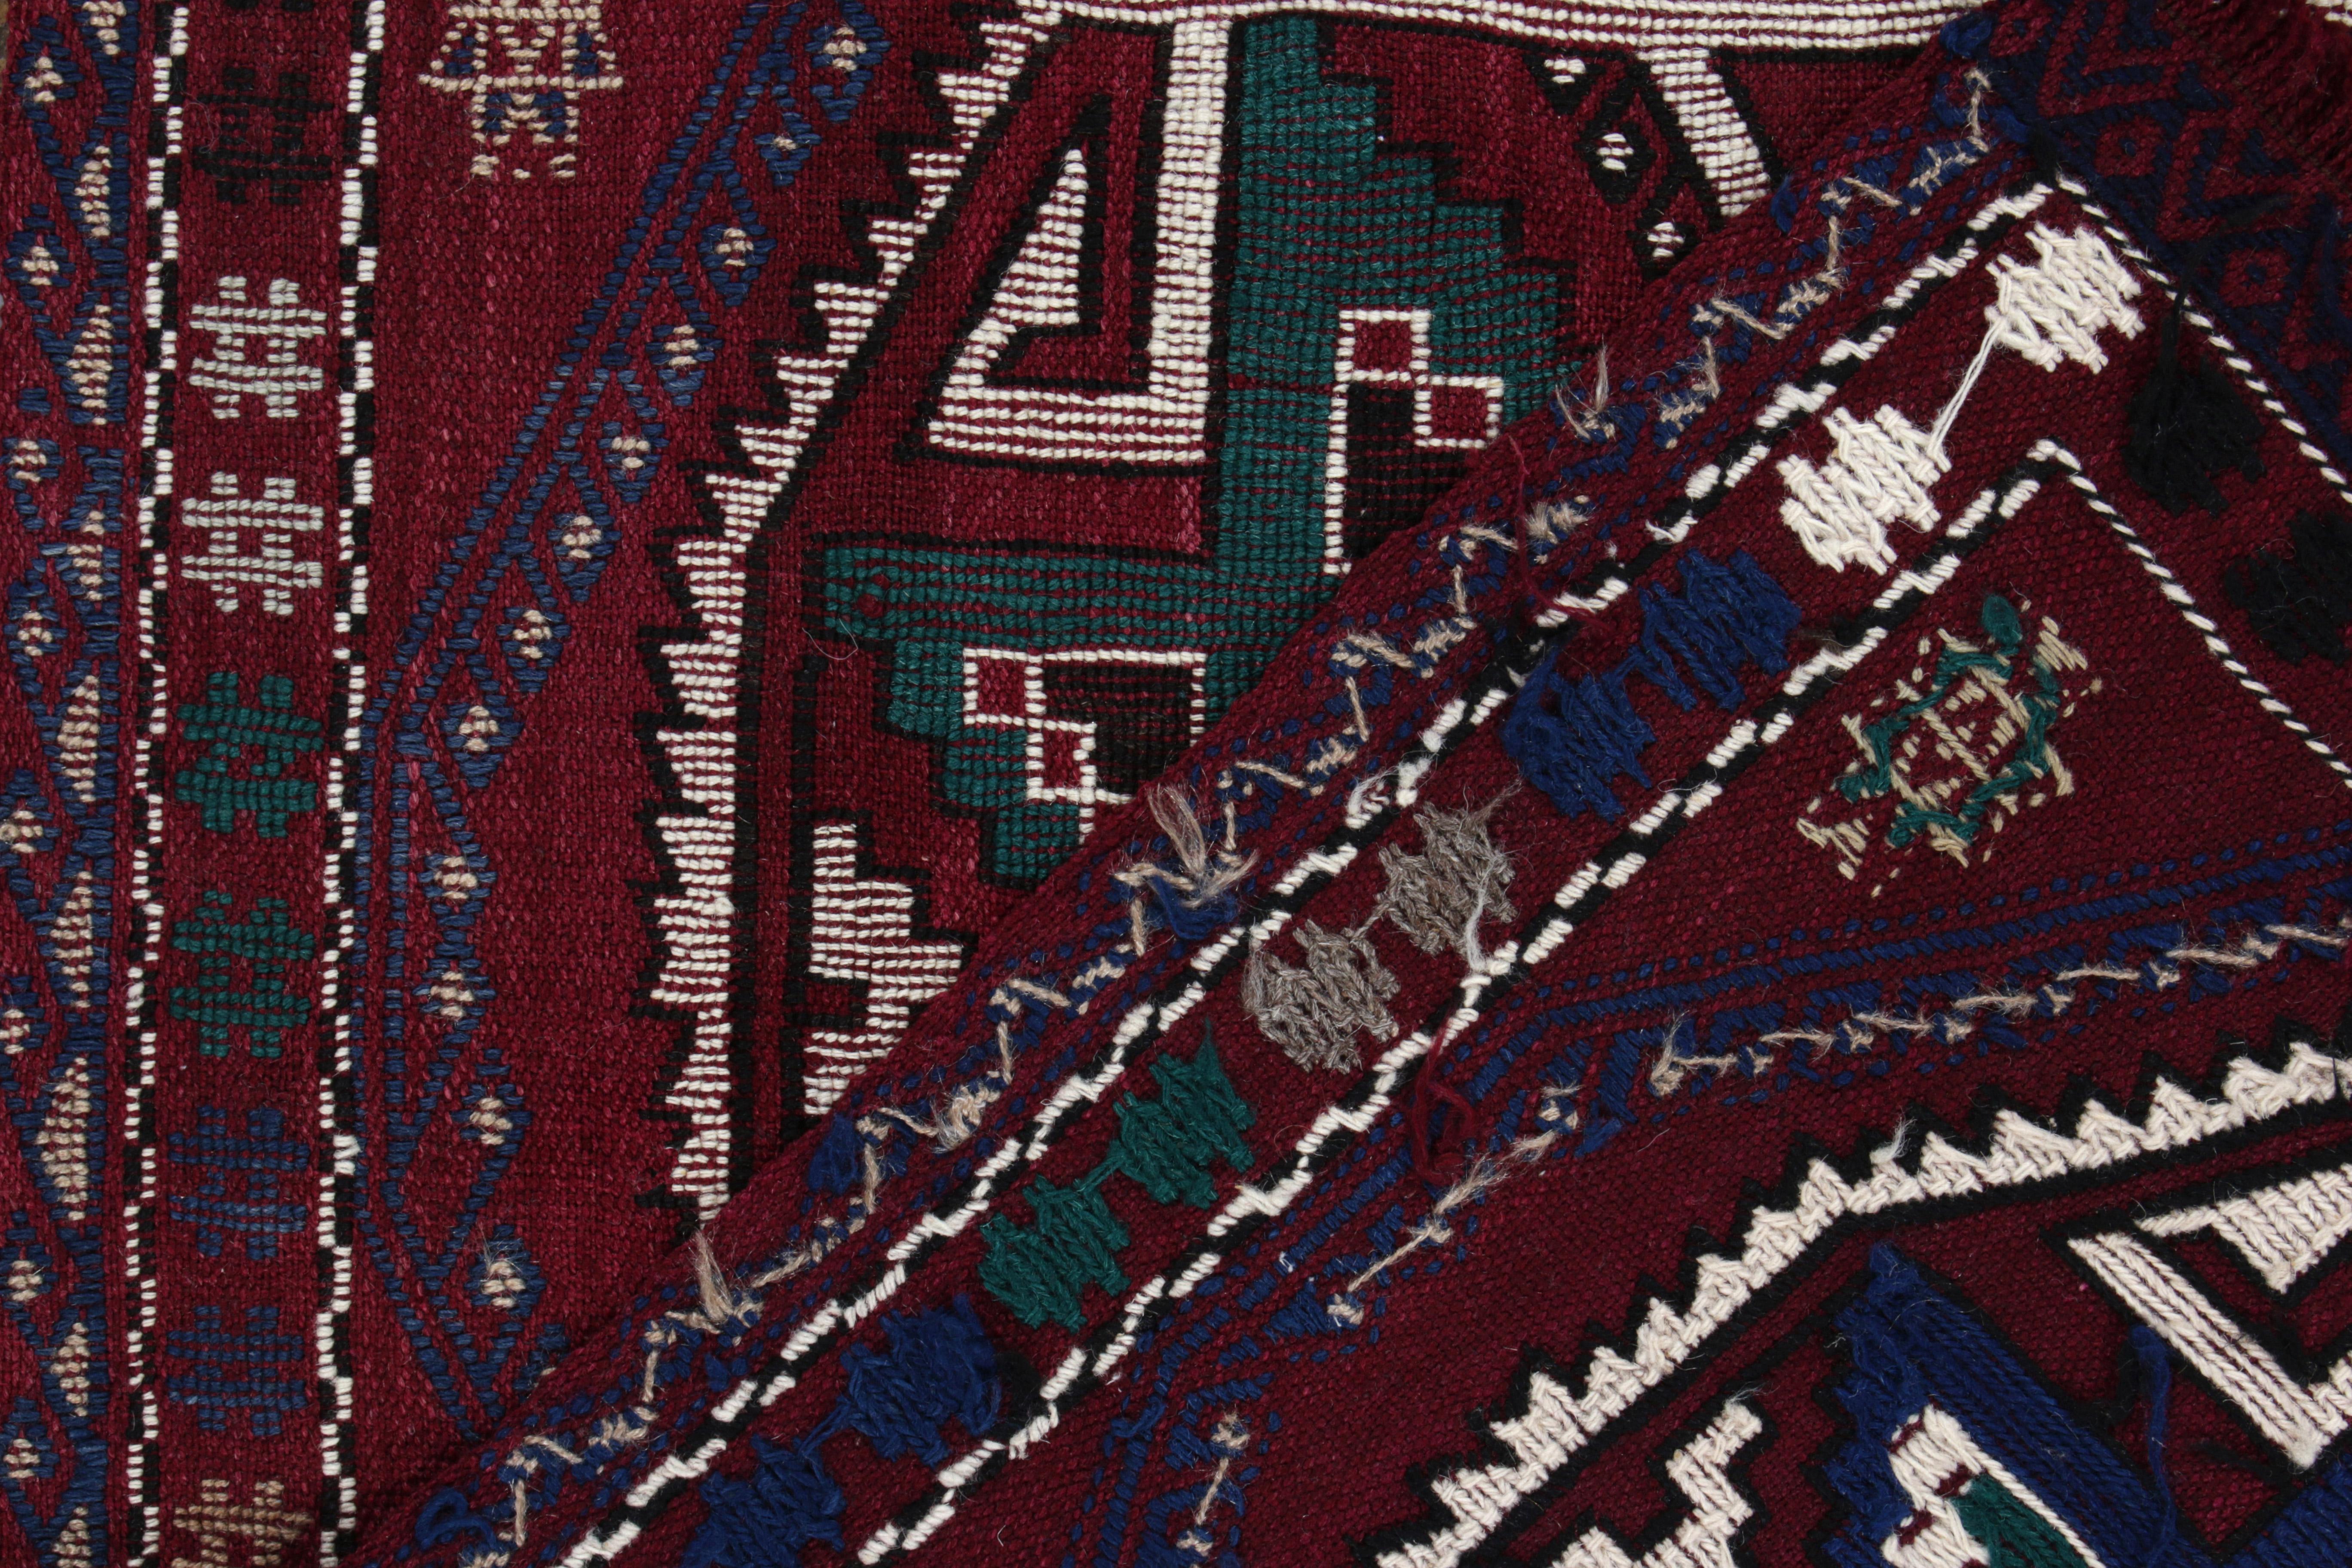 Mid-20th Century Vintage Turkish Kilim Rug in Wine, Teal & White Geometric Pattern by Rug & Kilim For Sale